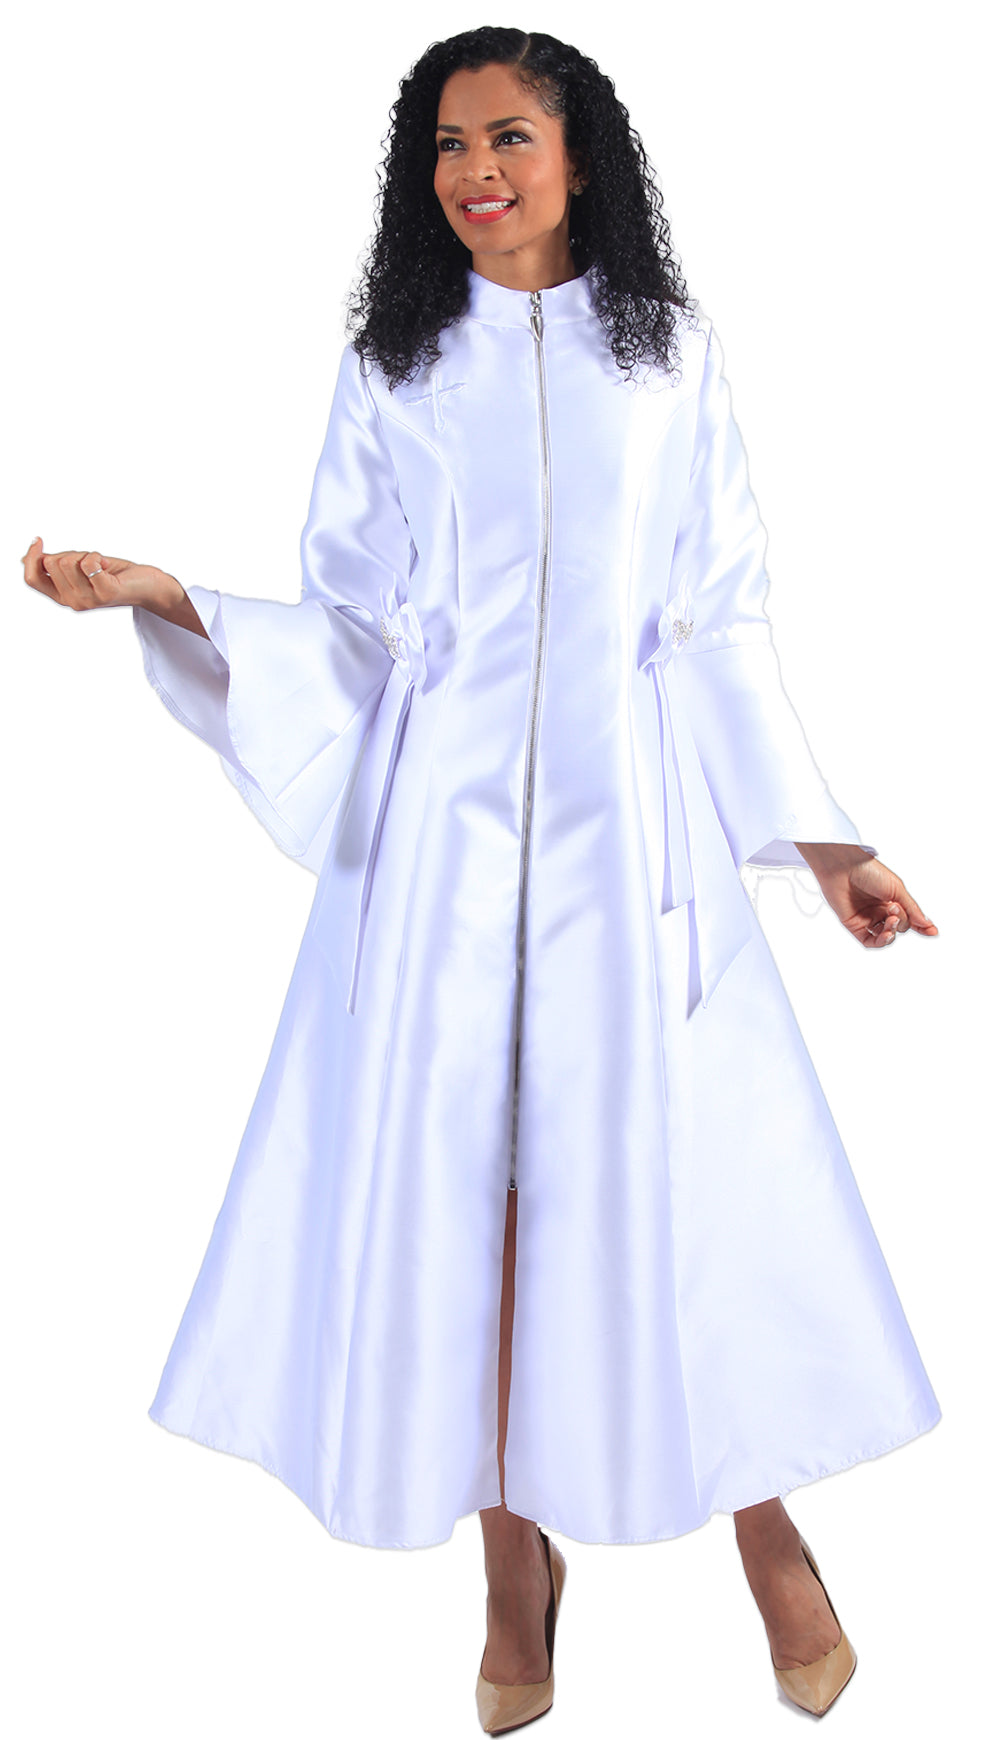 Diana Church Robe 8620-White - Church Suits For Less